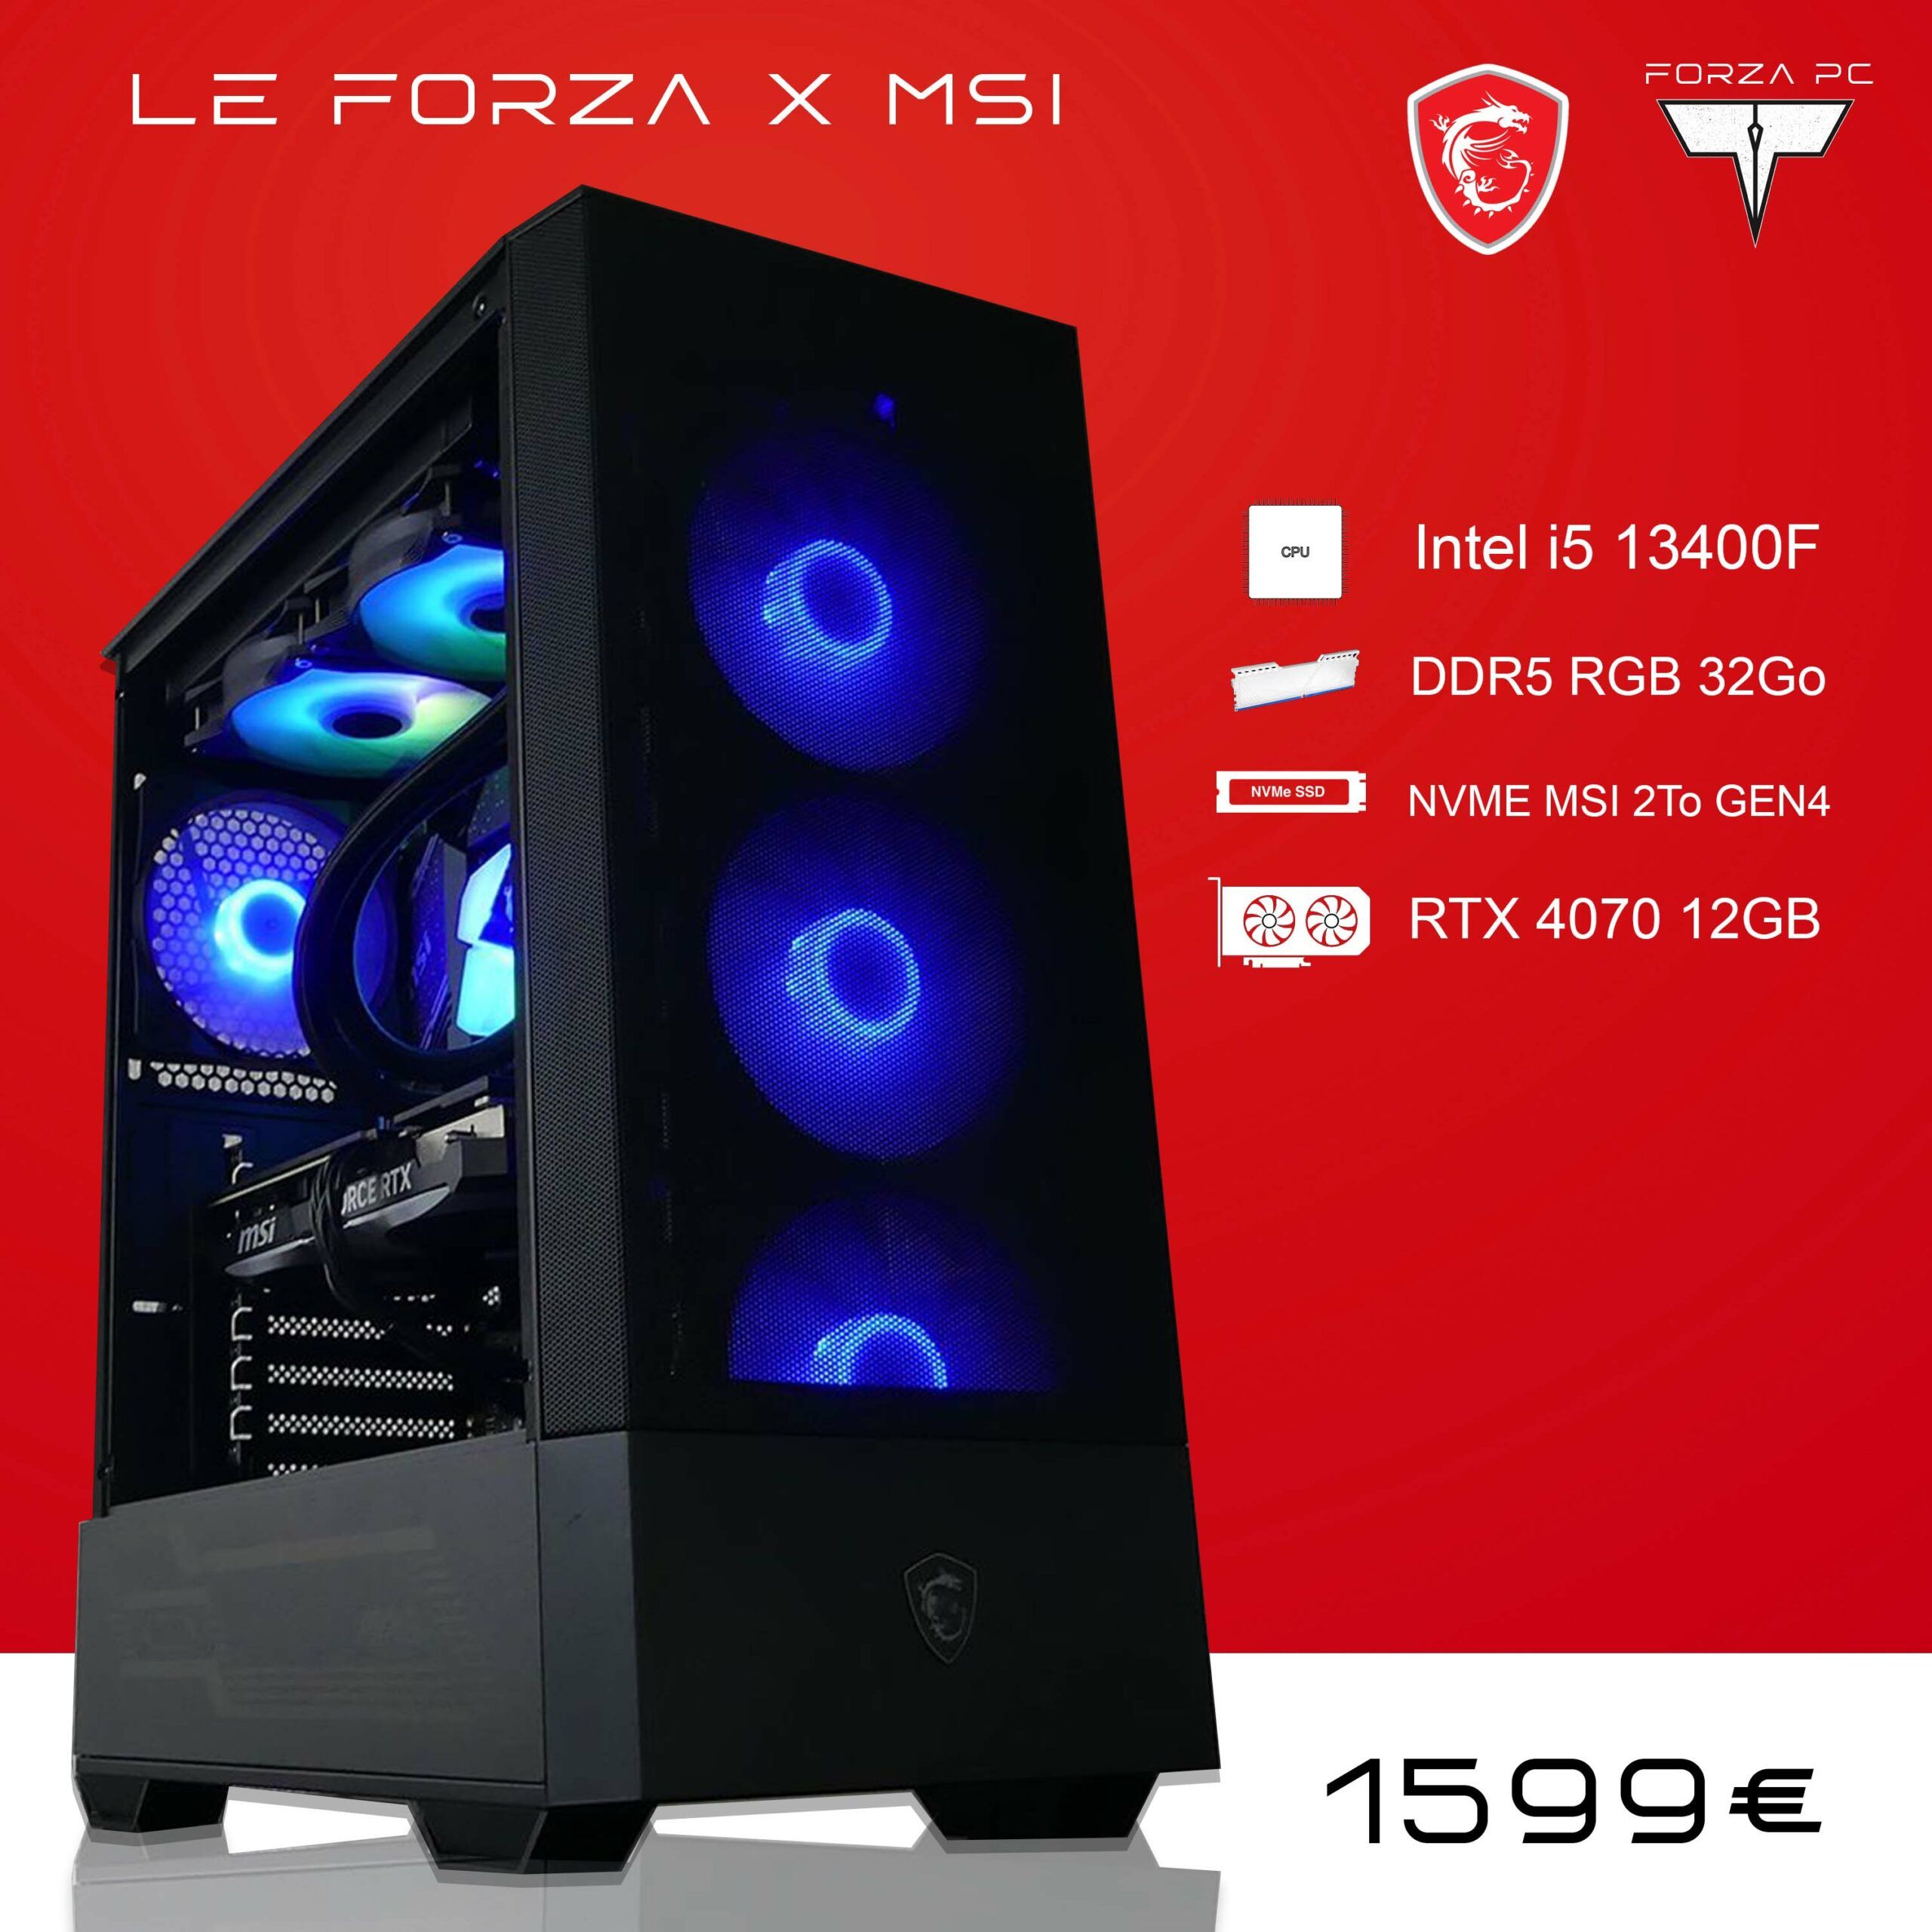 MSI + Forza PC